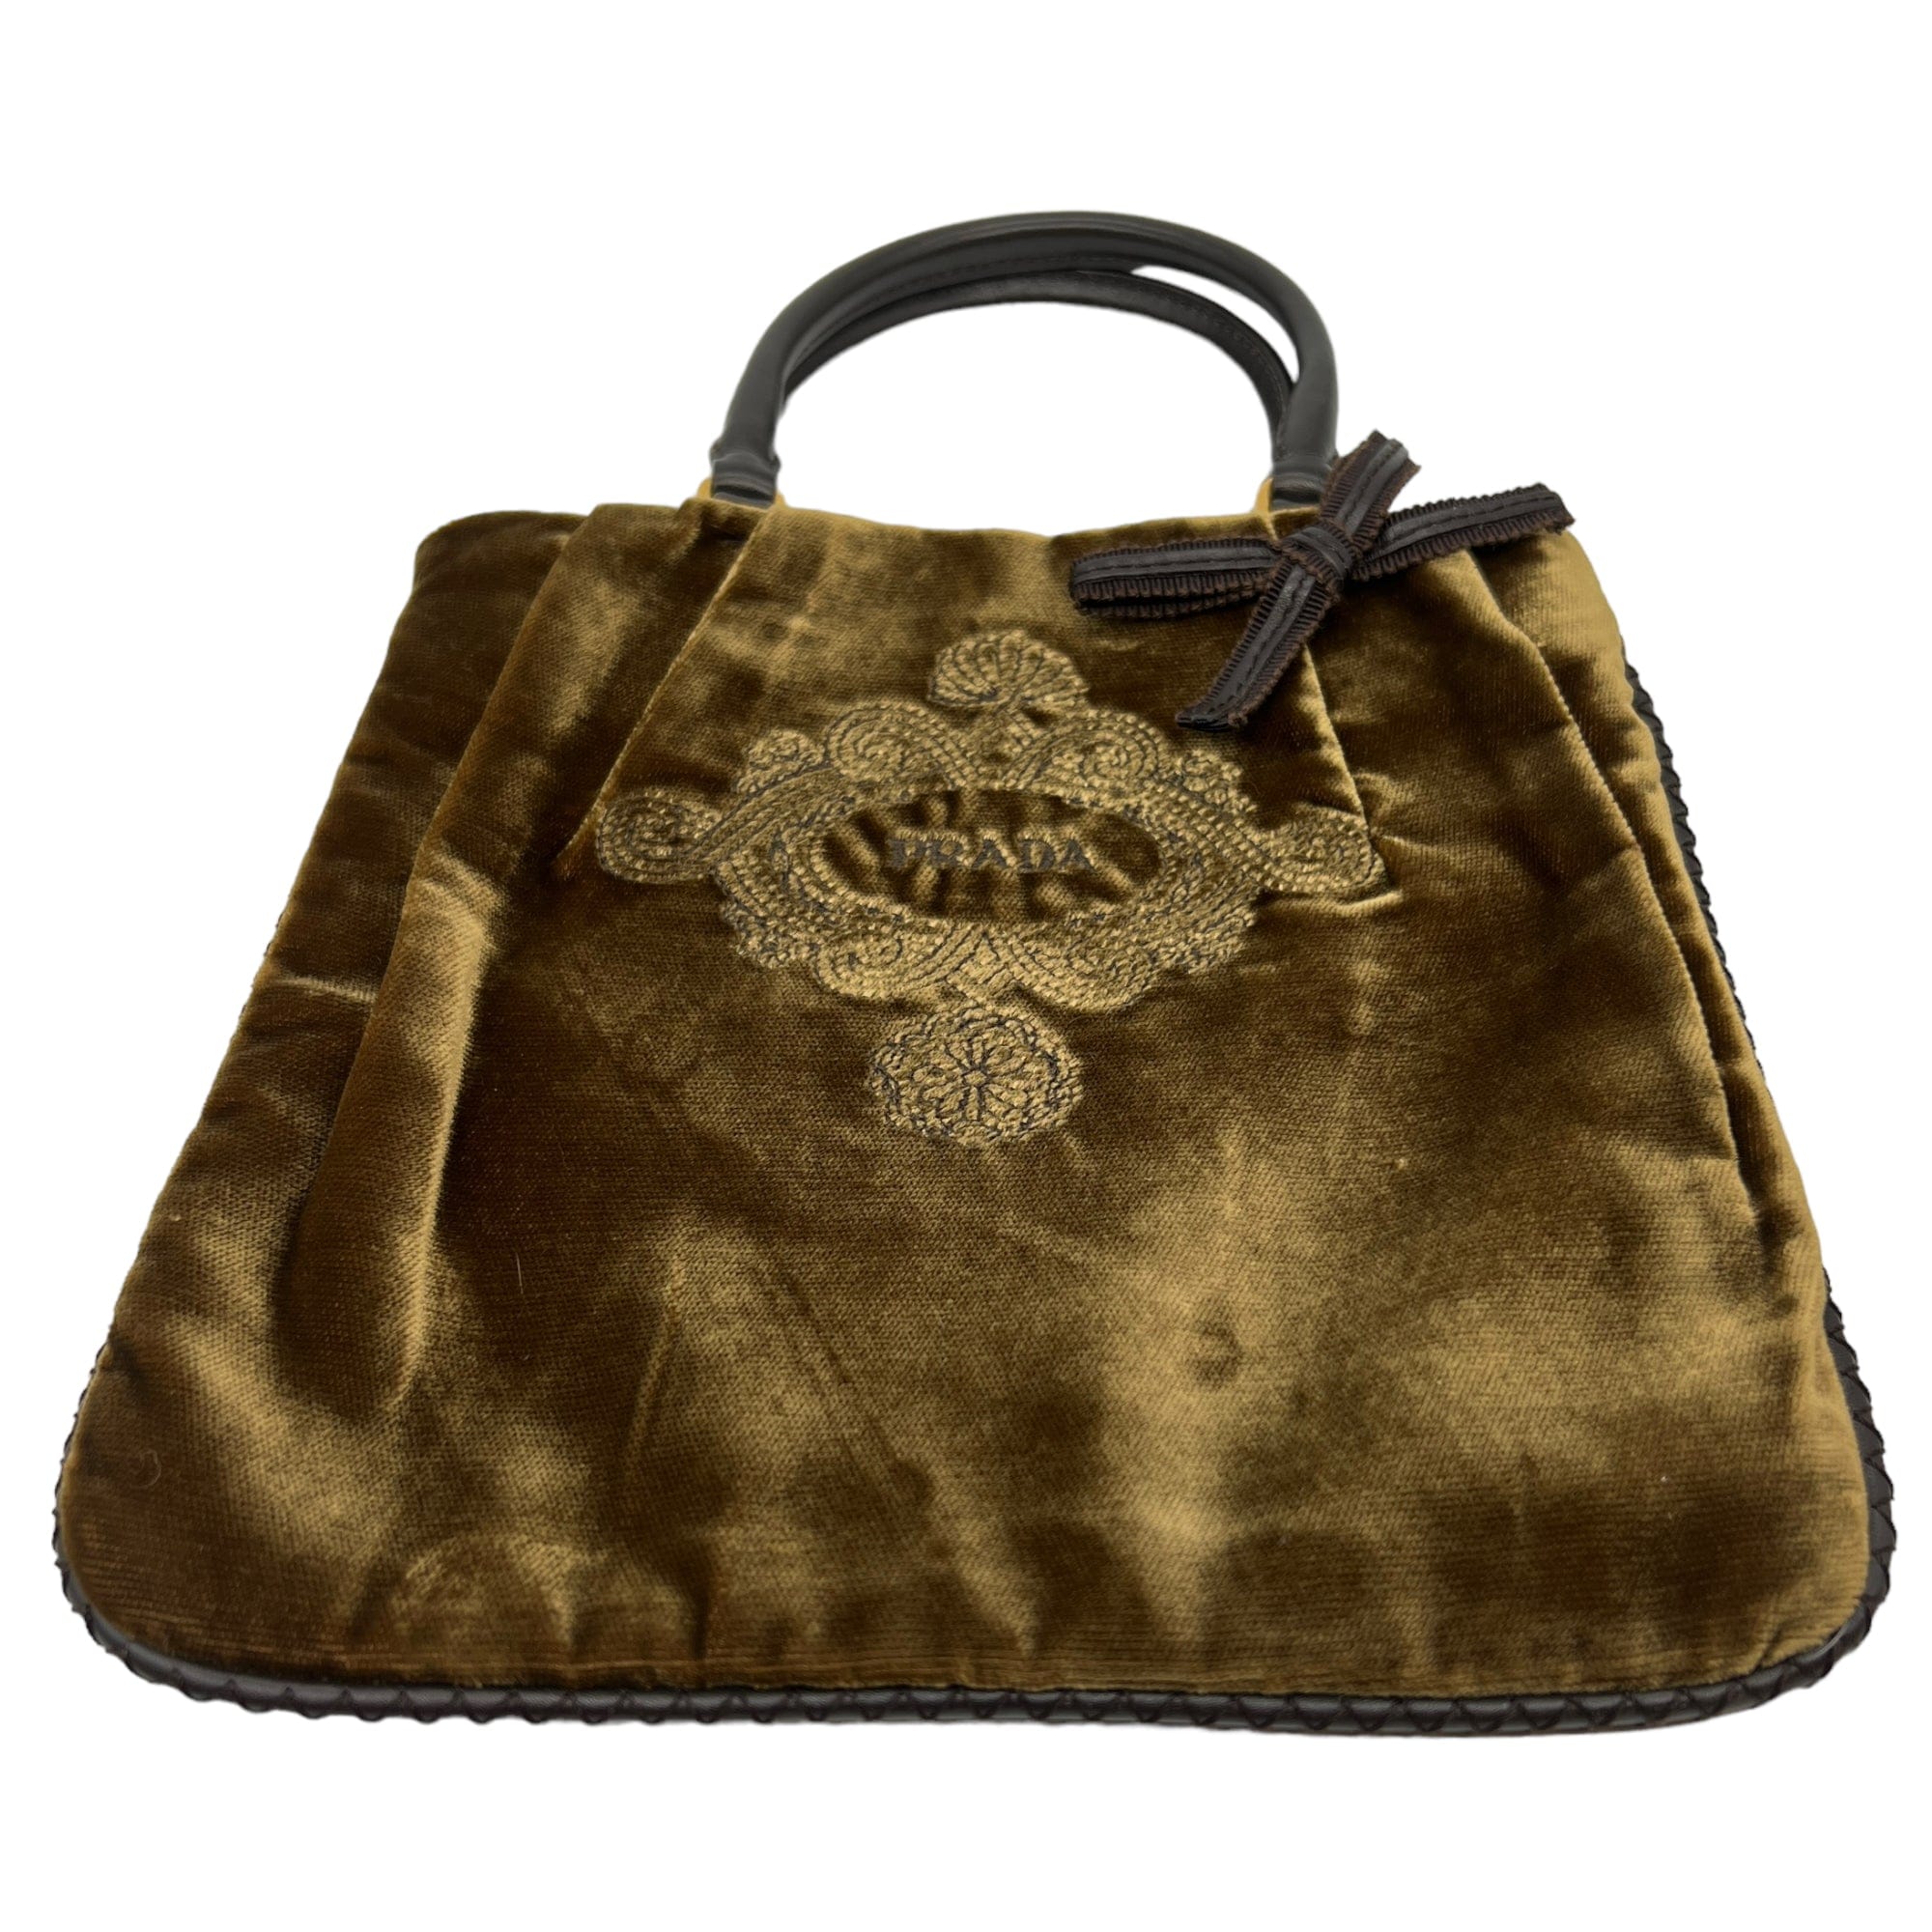 Shop Prada Leather Tote Bag